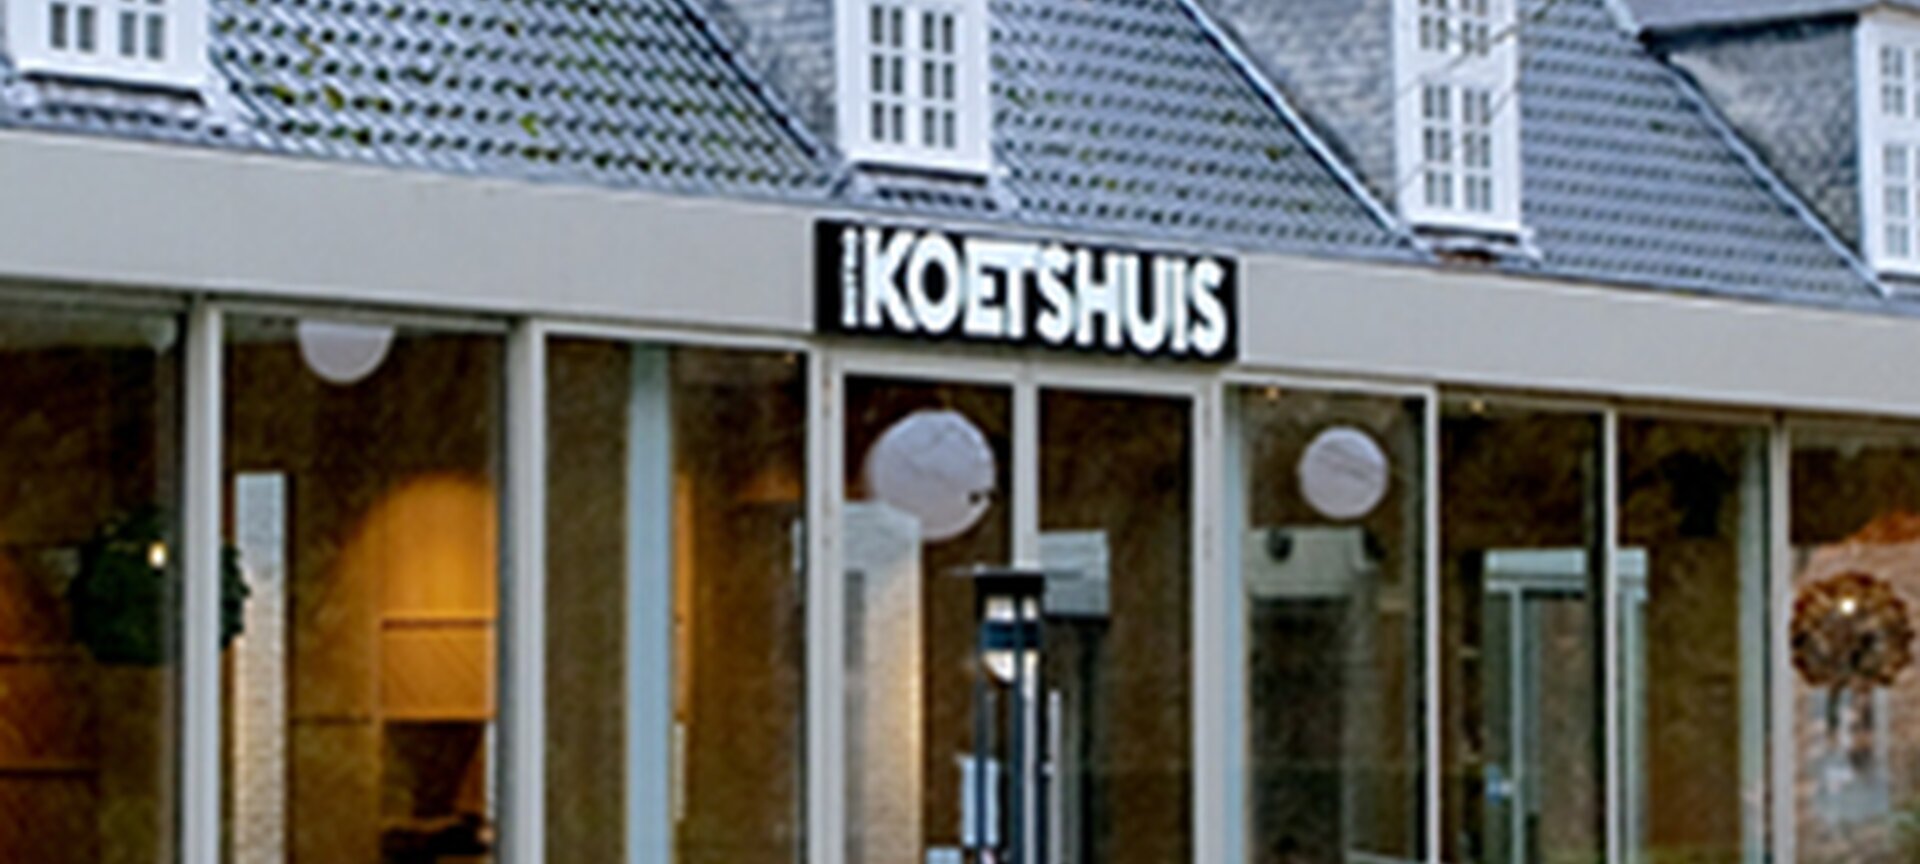 Bistro Koetshuis - Kleine zaal